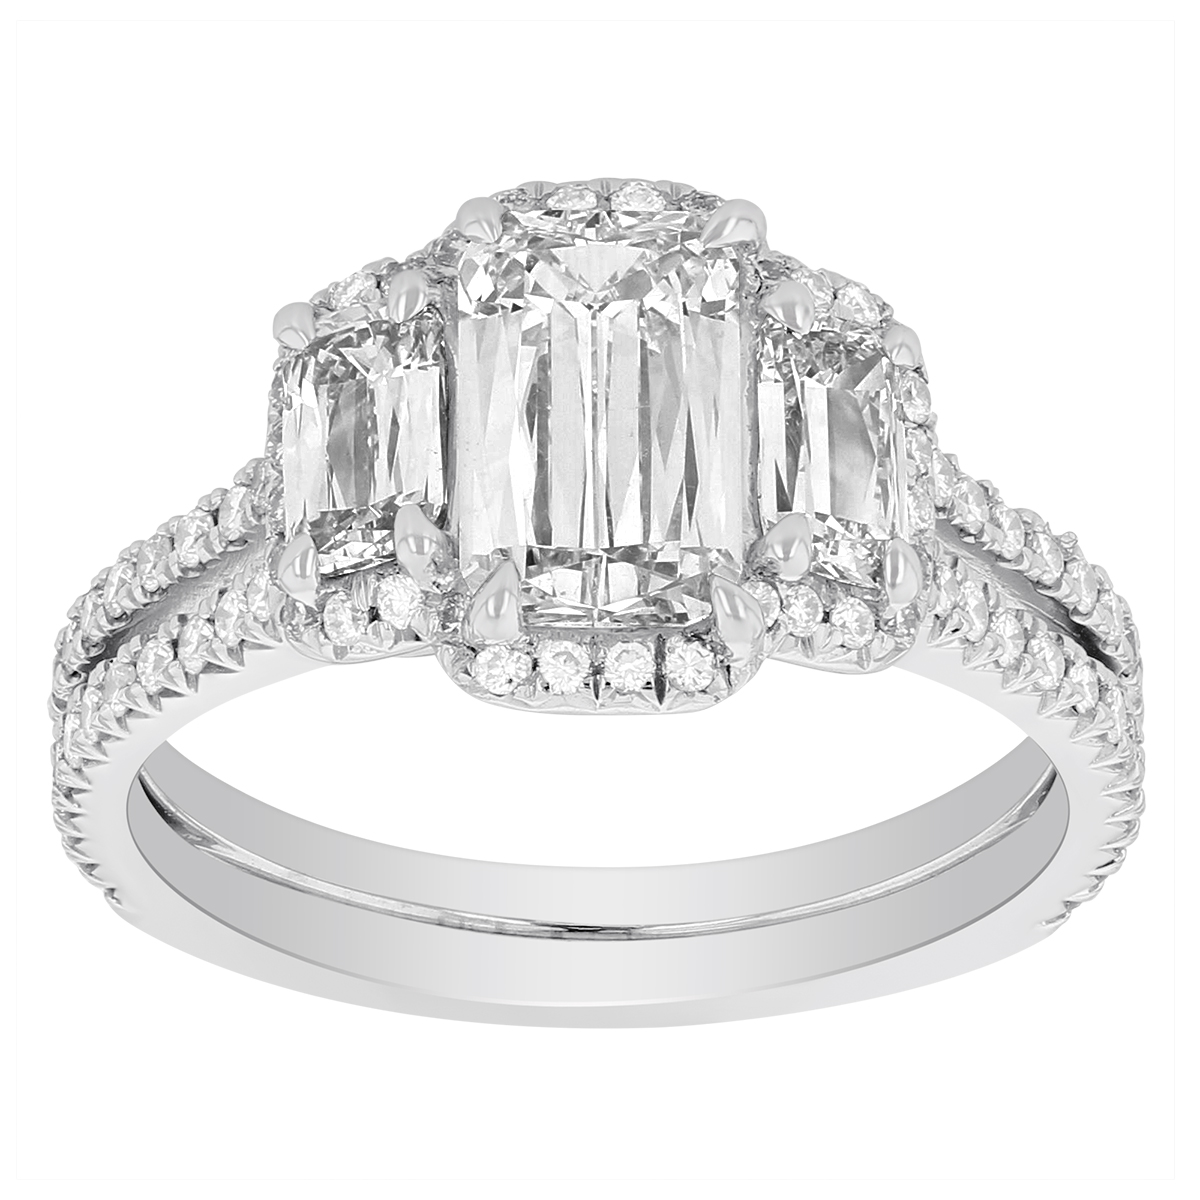 Costco Selling Fake Tiffany Diamond Rings - Judge Rules Costco Must Pay $19  Million